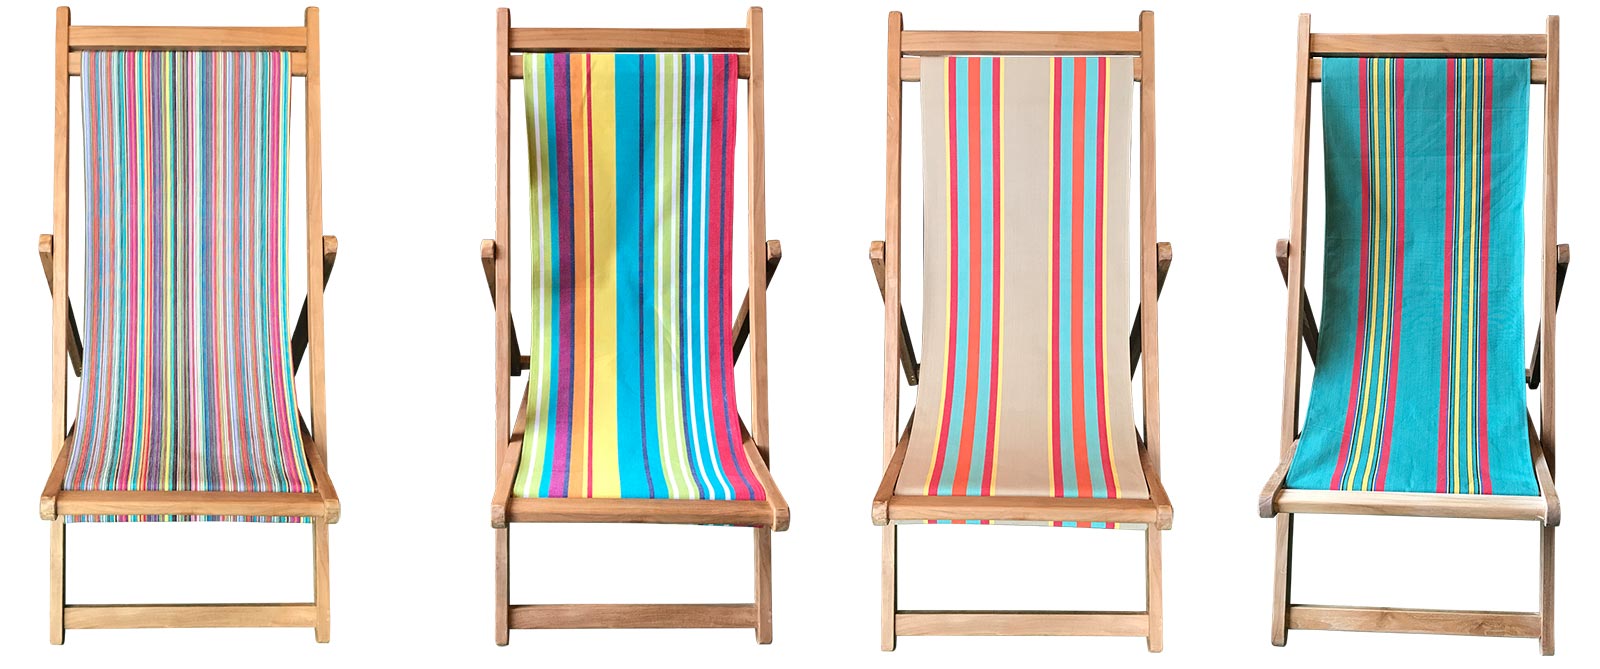 Premium Deck Chairs | The Stripes Company Australia